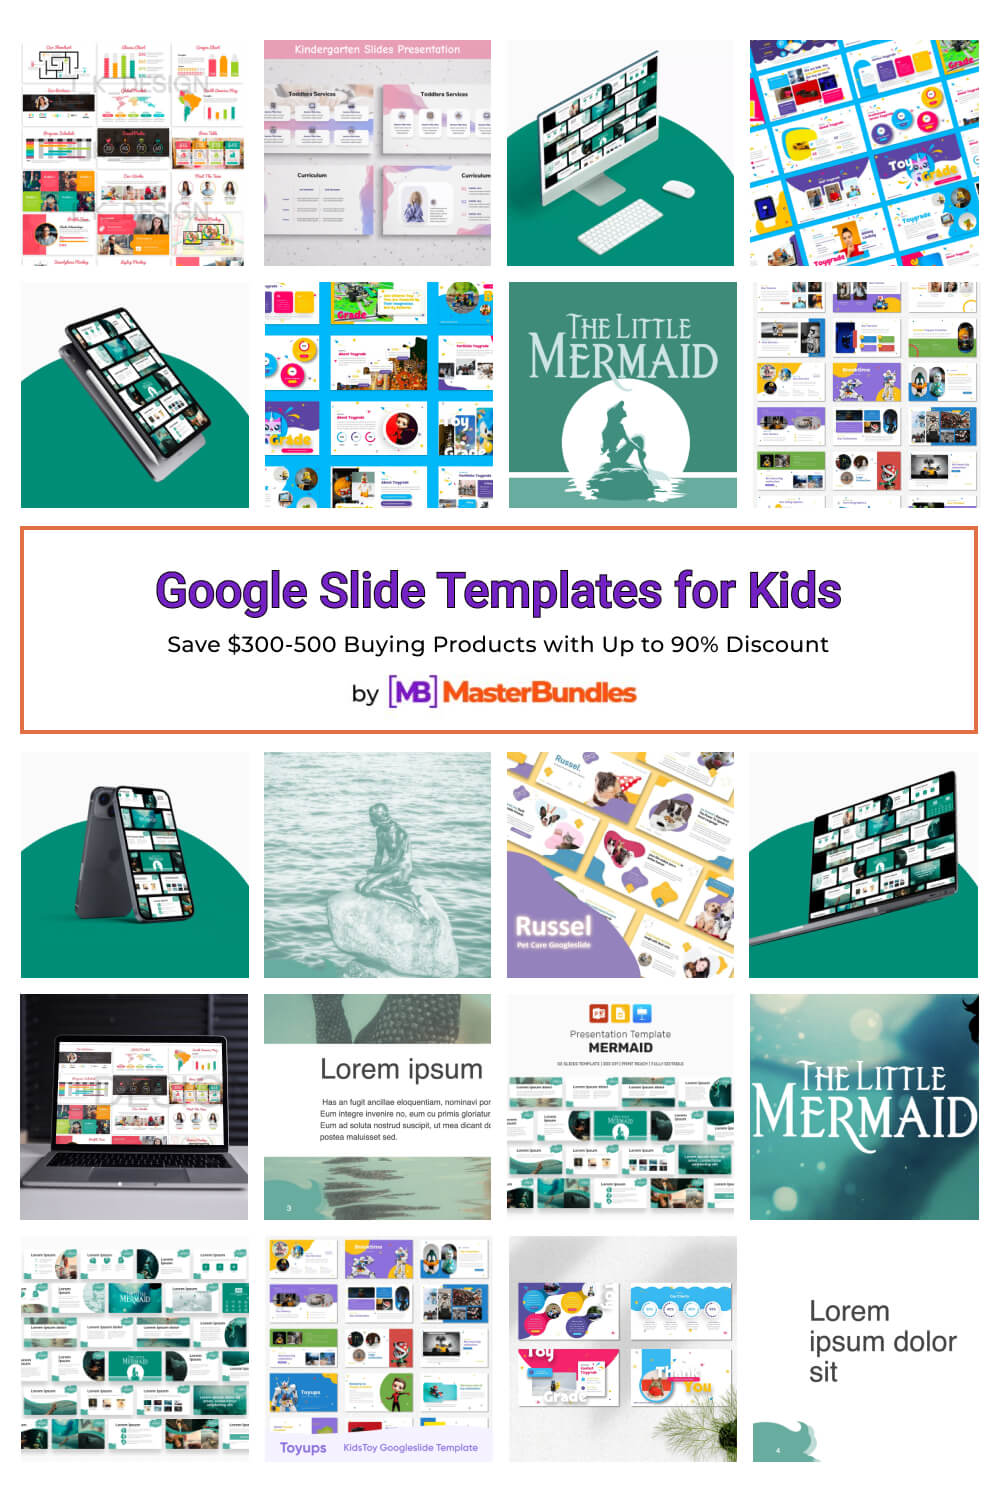 google slide templates for kids pinterest image.